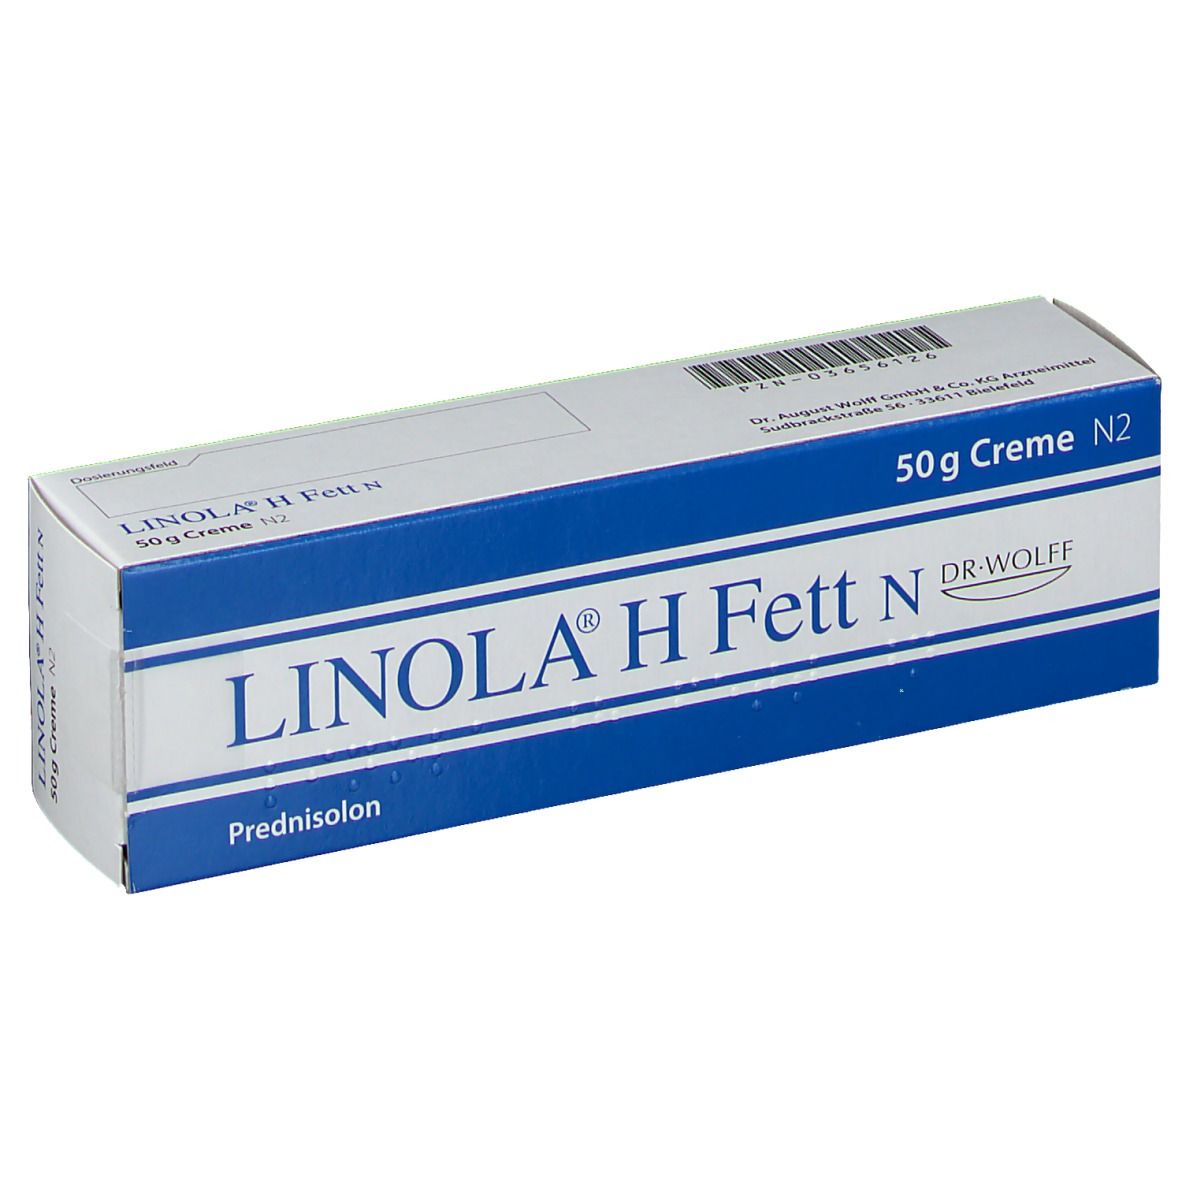 Linola® H Fett N